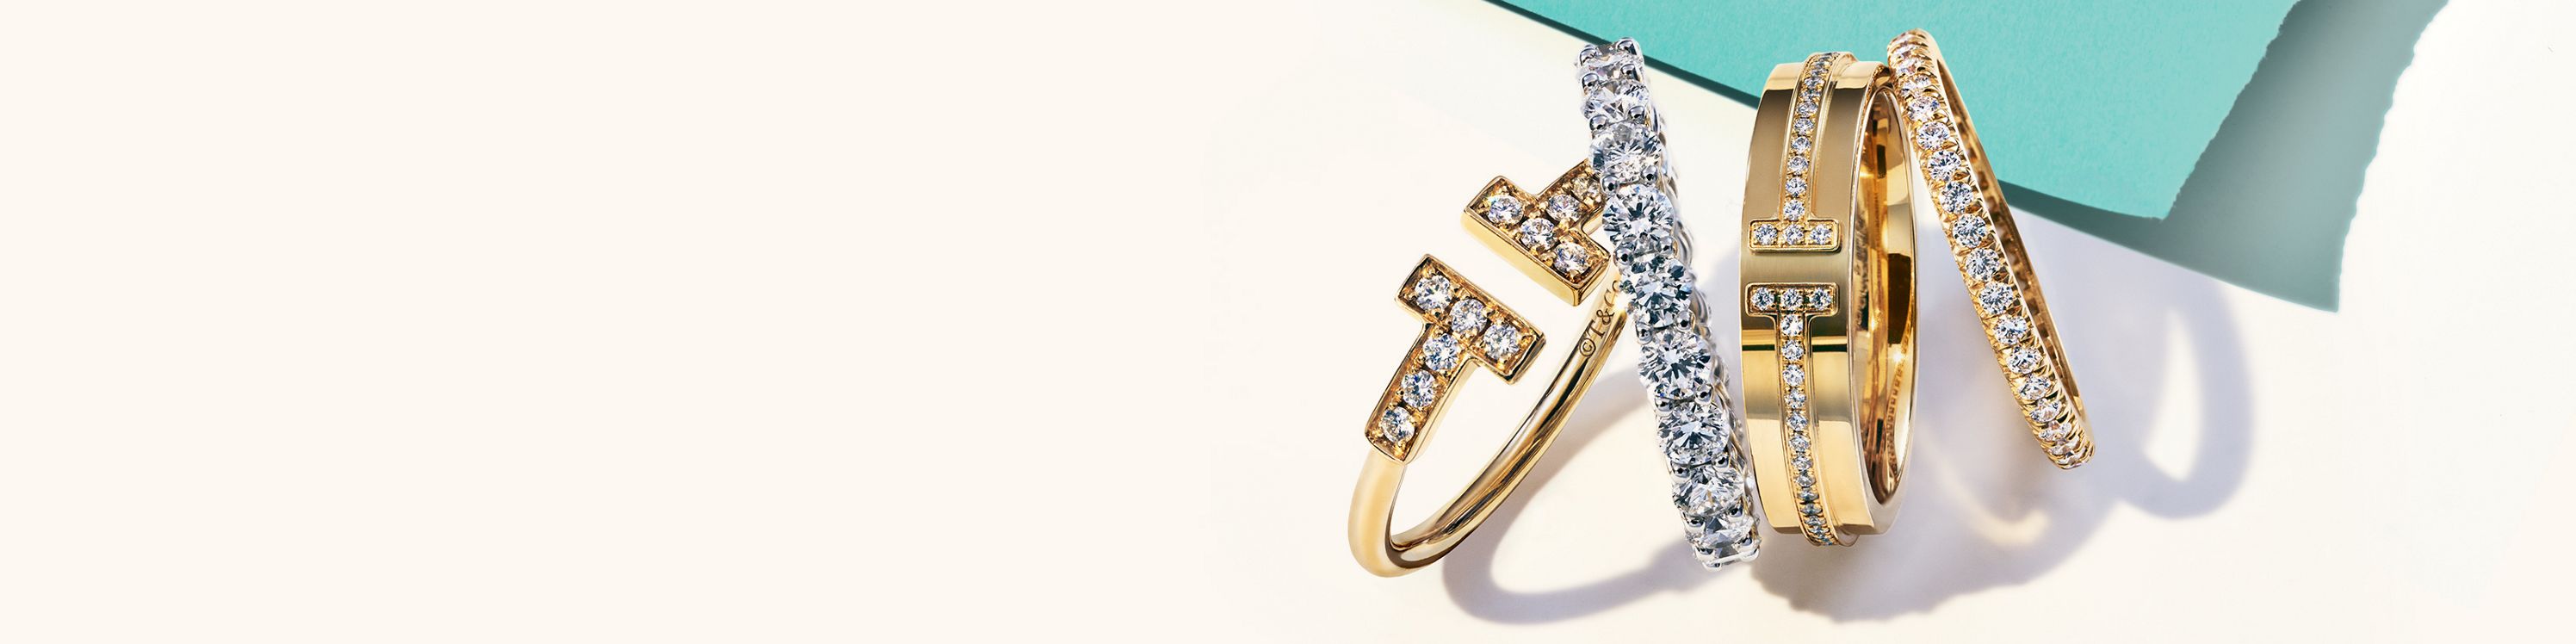 Rings For Women Tiffany Co